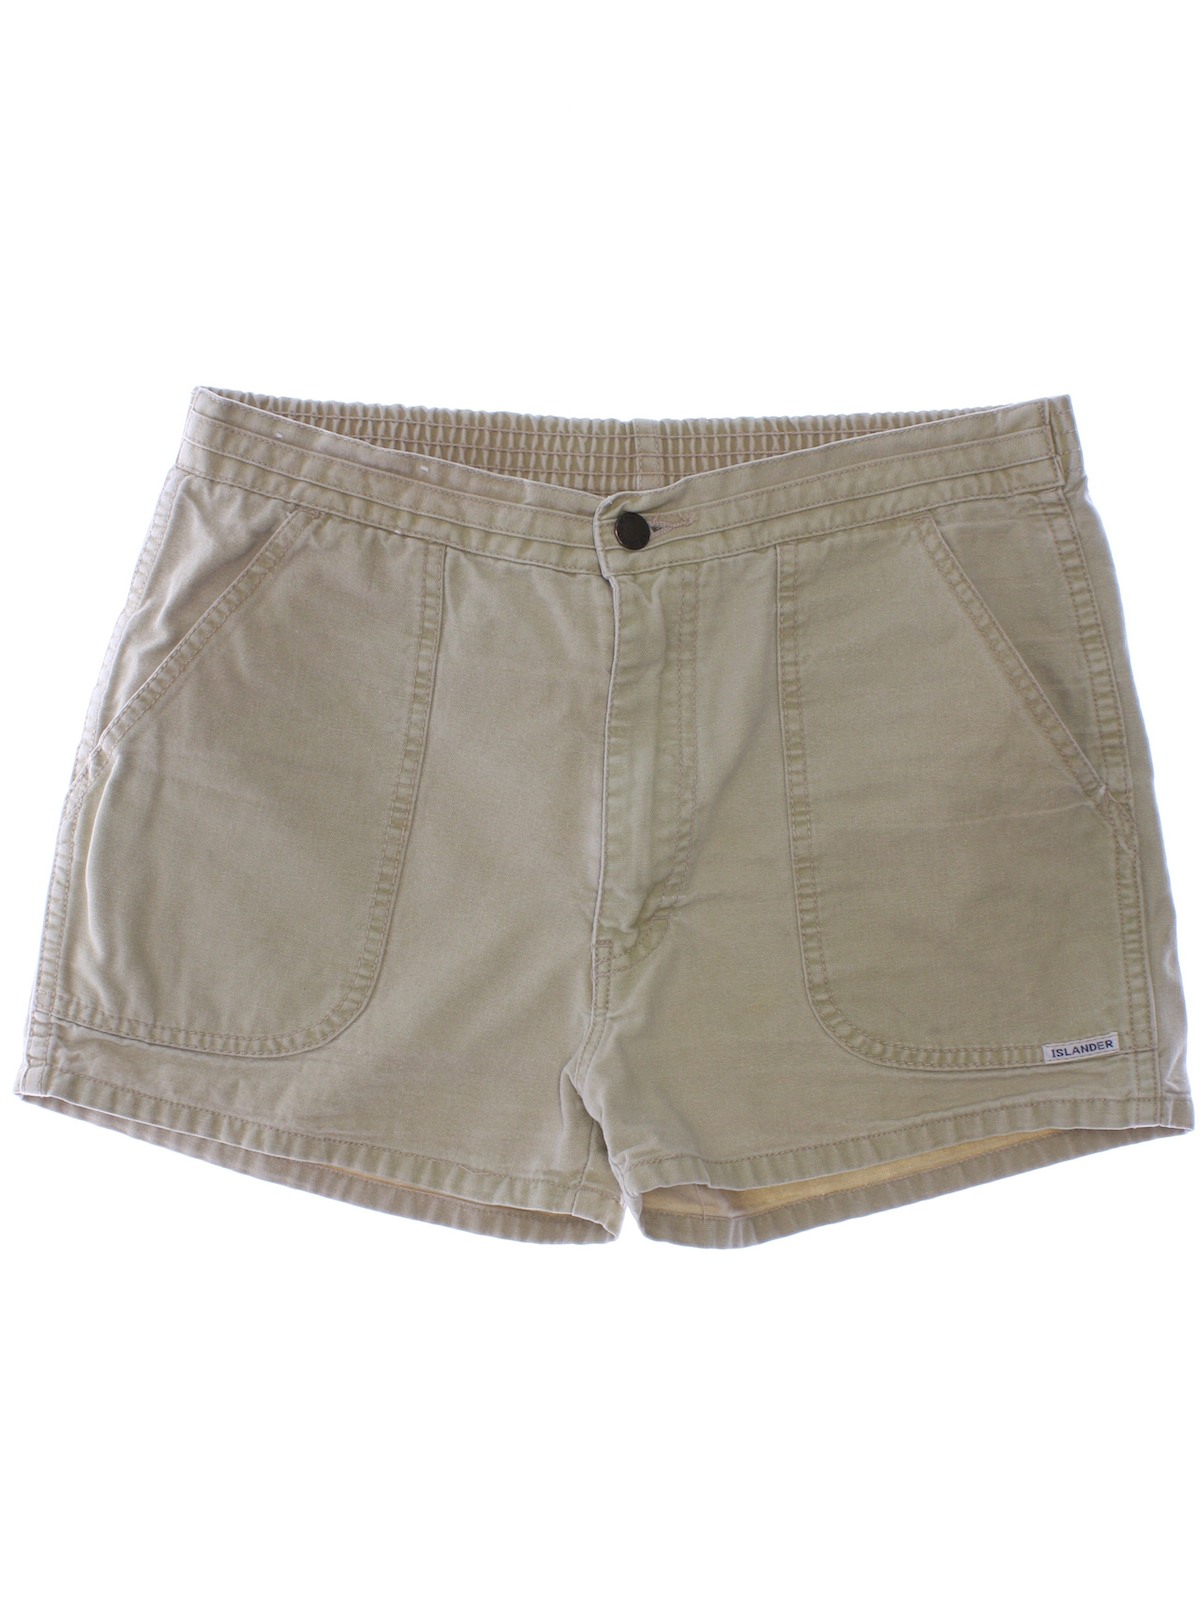 70s Retro Shorts: 70s -Islander- Mens tan background thick cotton three ...